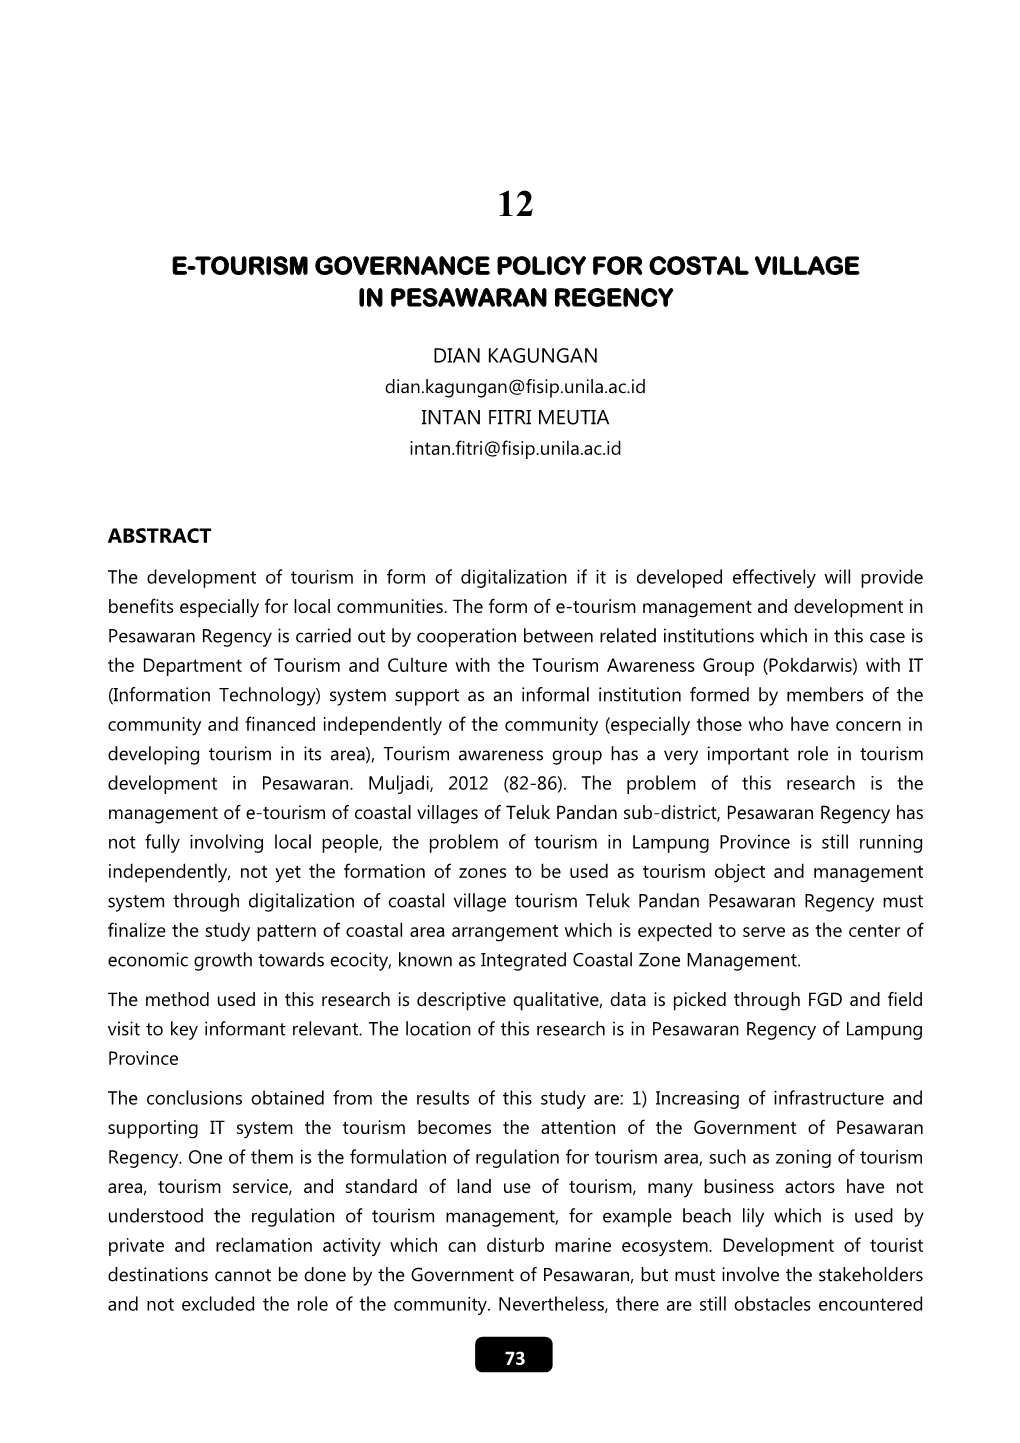 E-Tourism Governance Policy for Costal Village in Pesawaran Regency